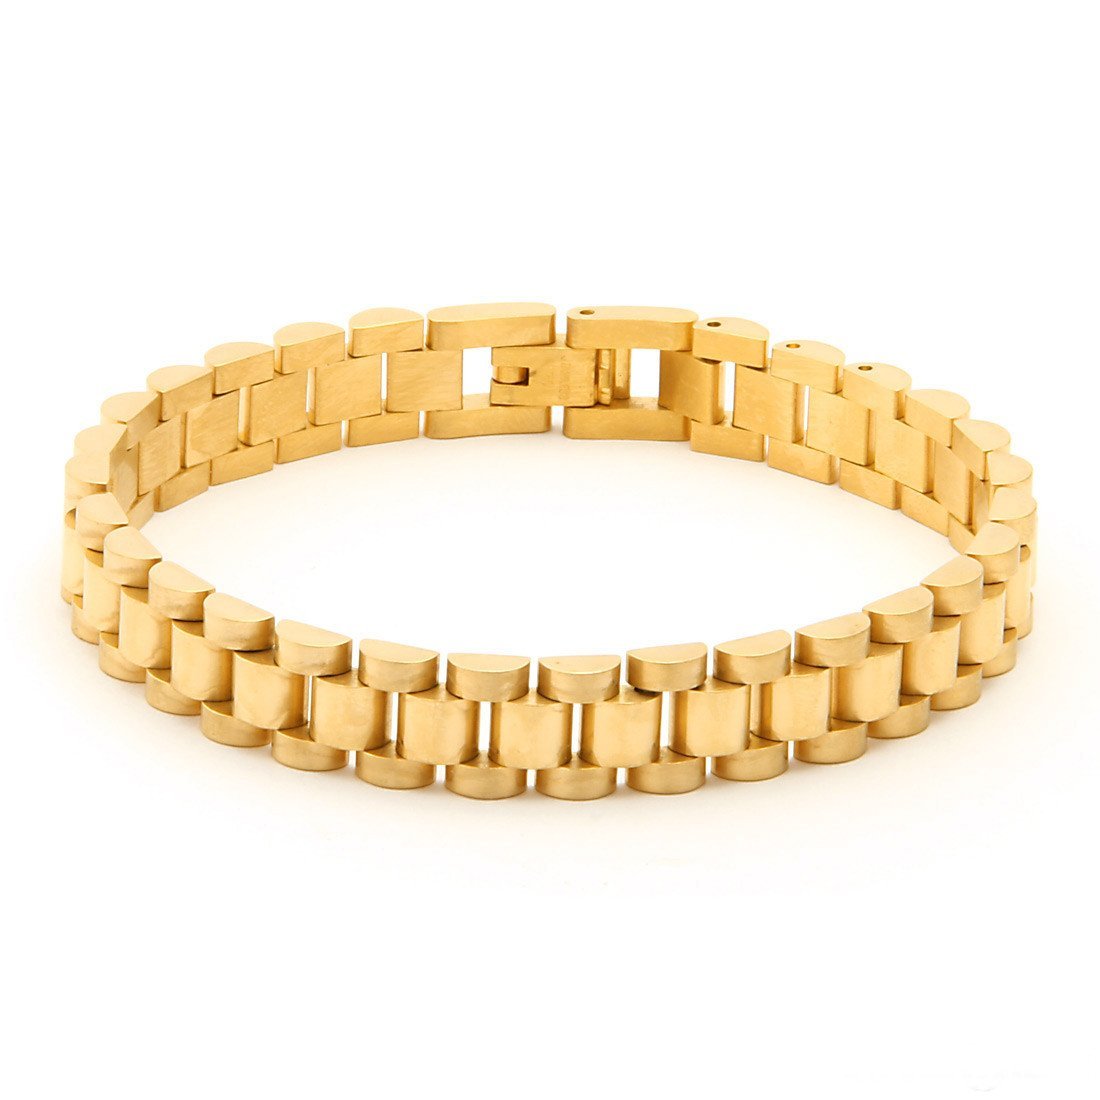 8.5 / 14K Gold The 14K Gold 10mm Rolex Watch Link Stainless Steel Bracelet BRX10275-Gold